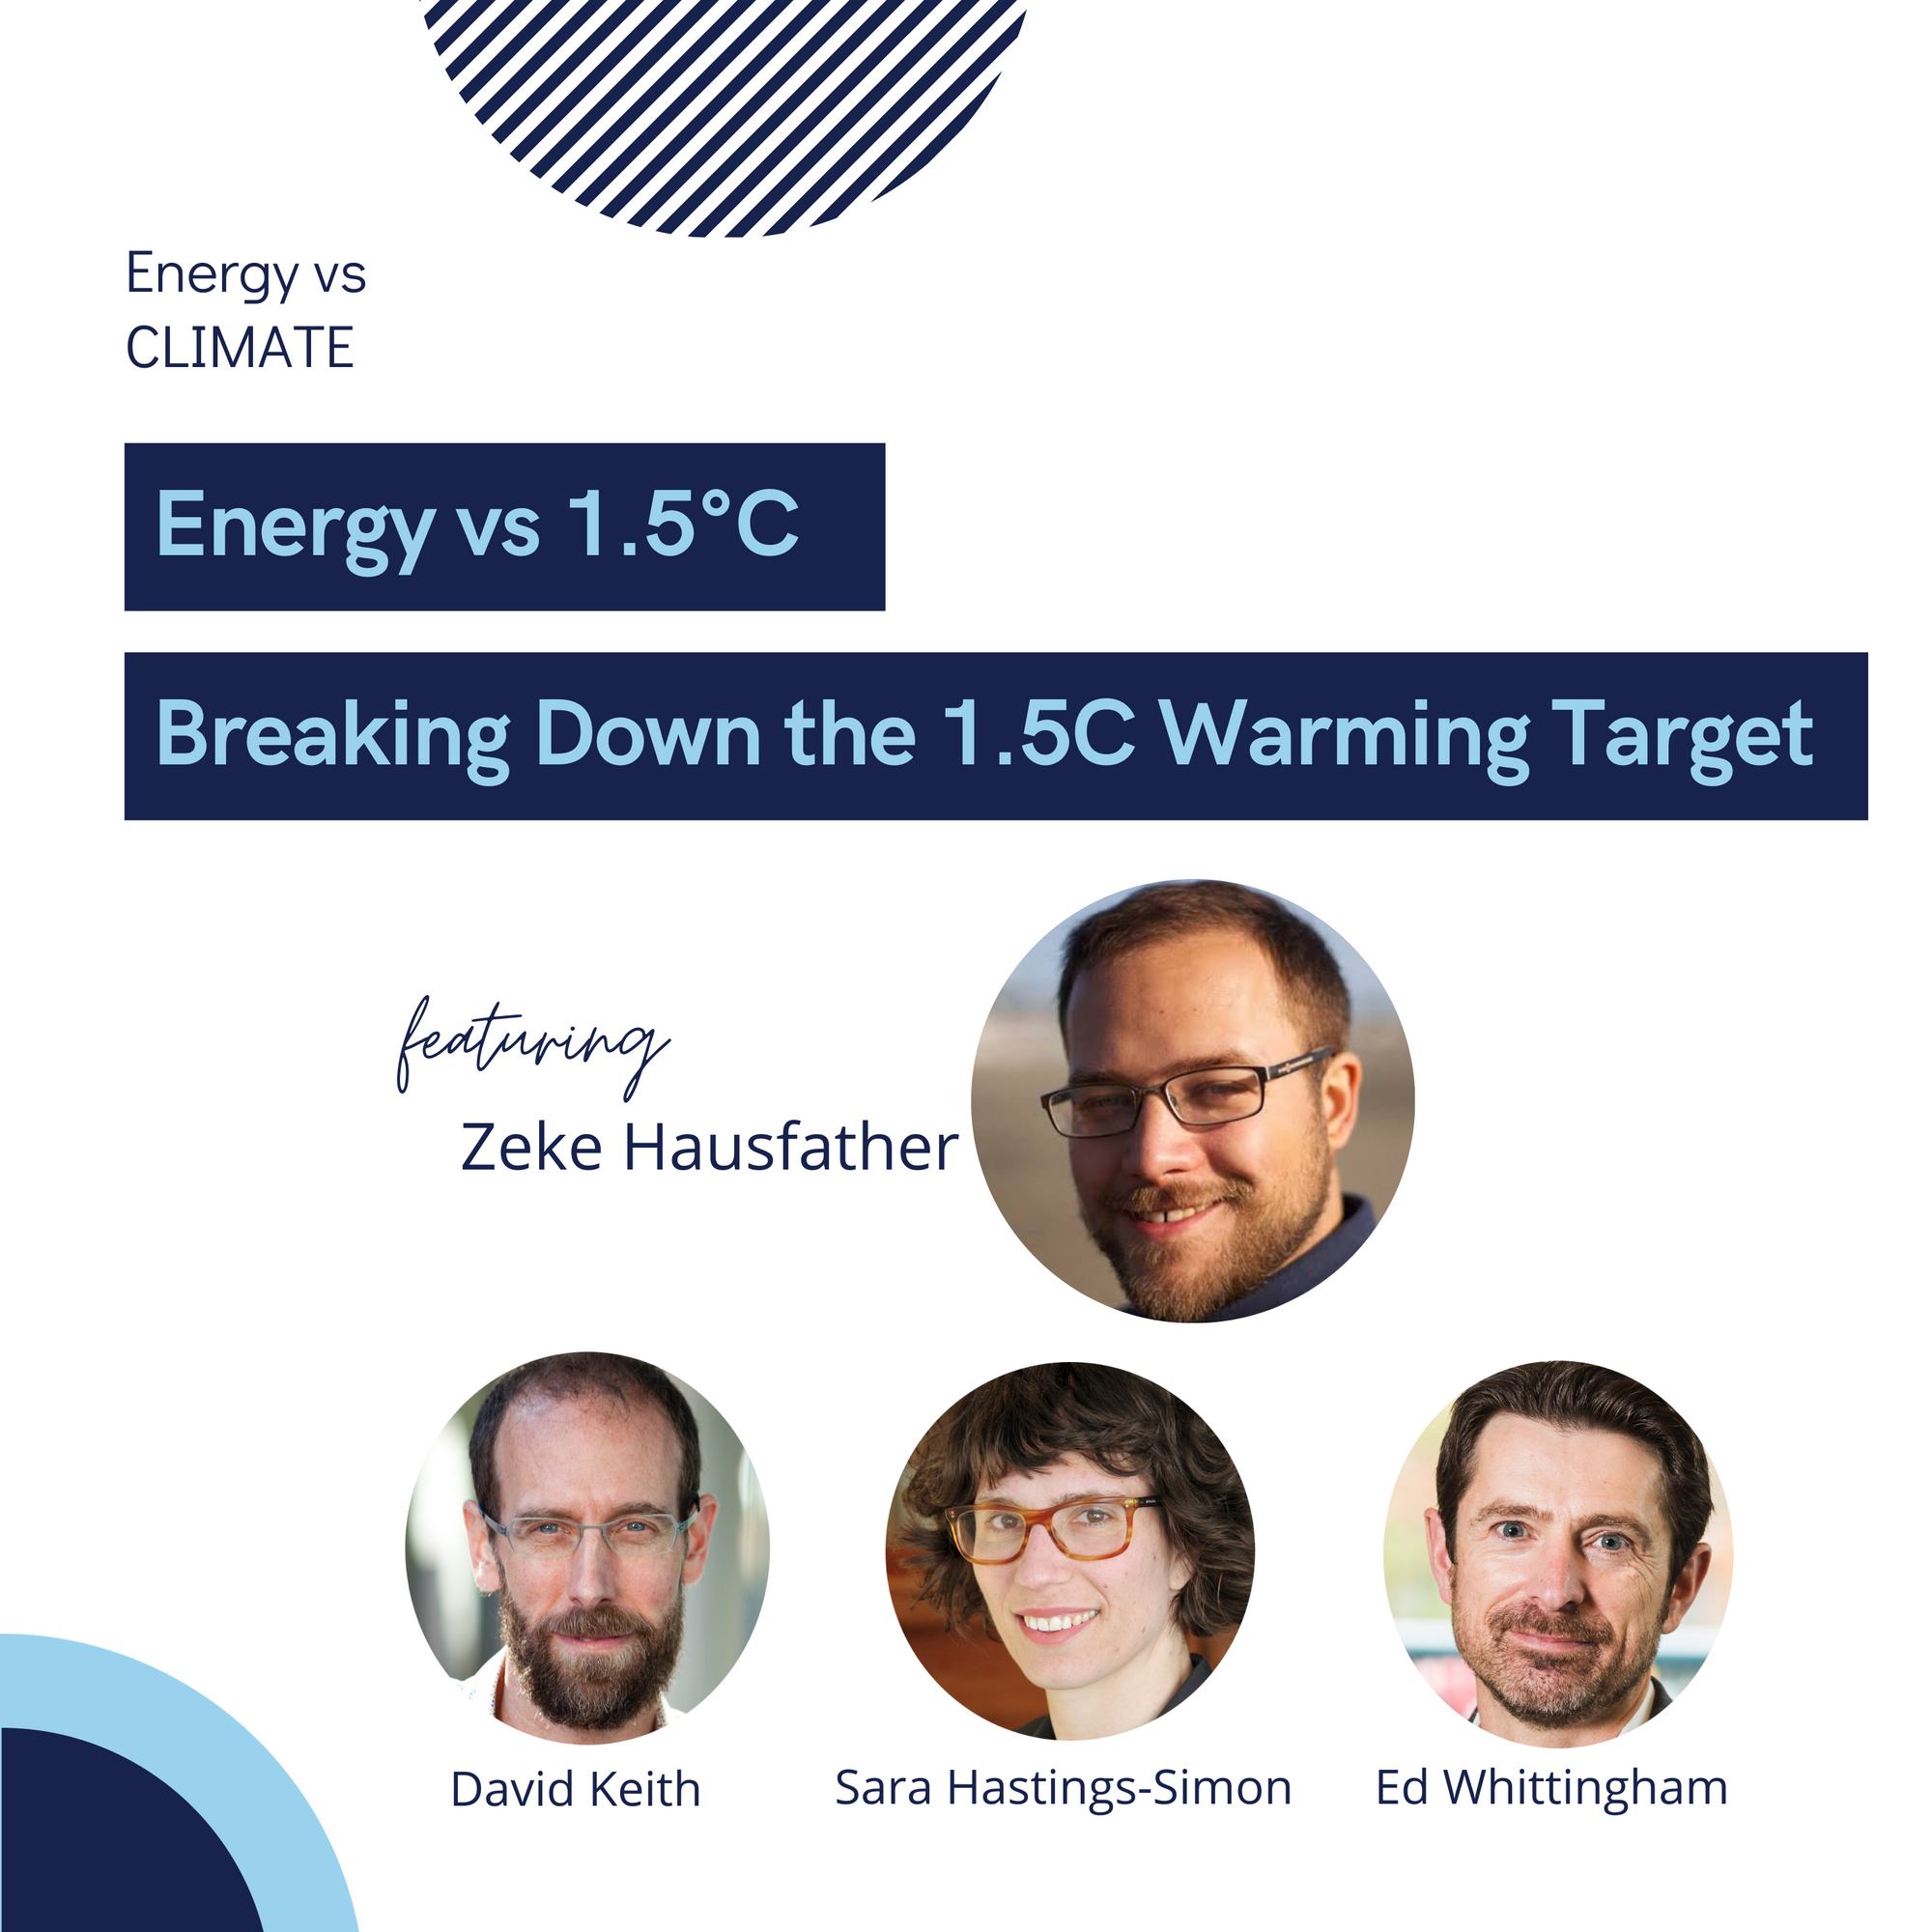 Energy vs 1.5°C - Breaking Down the 1.5C Warming Target